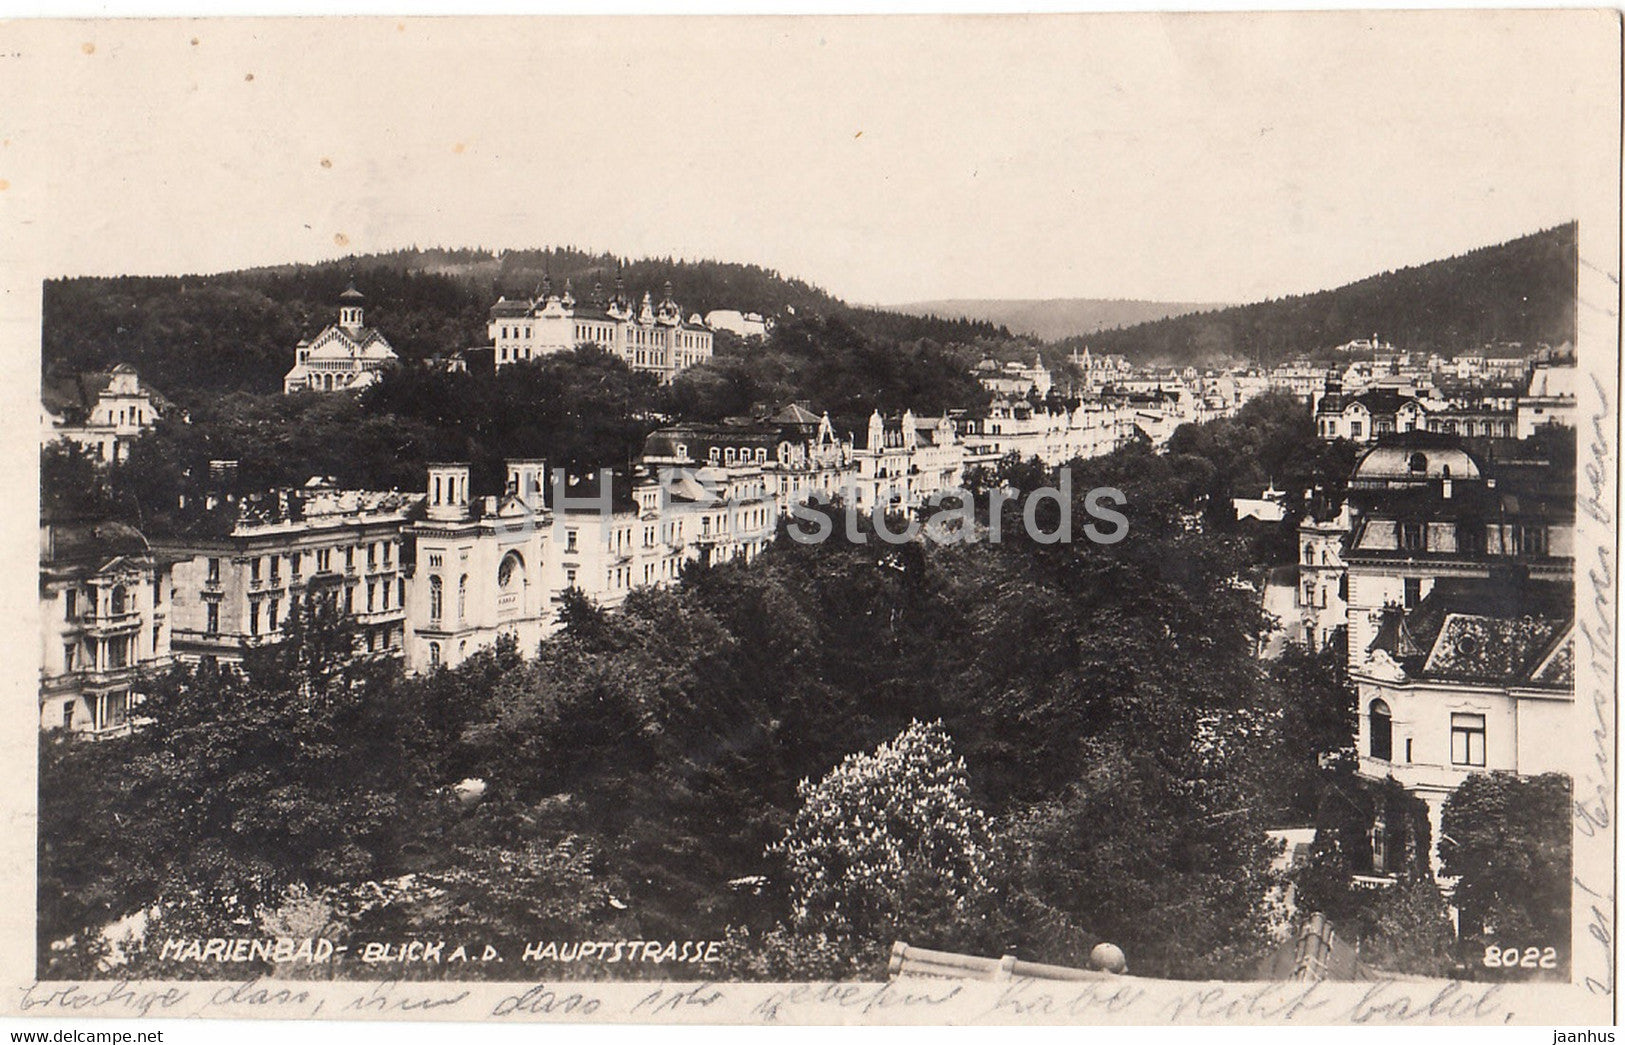 Marianske Lazne - Marienbad - Blick a d Hauptstrasse - 8022 - old postcard - 1929 Czechoslovakia - Czech Republic - used - JH Postcards